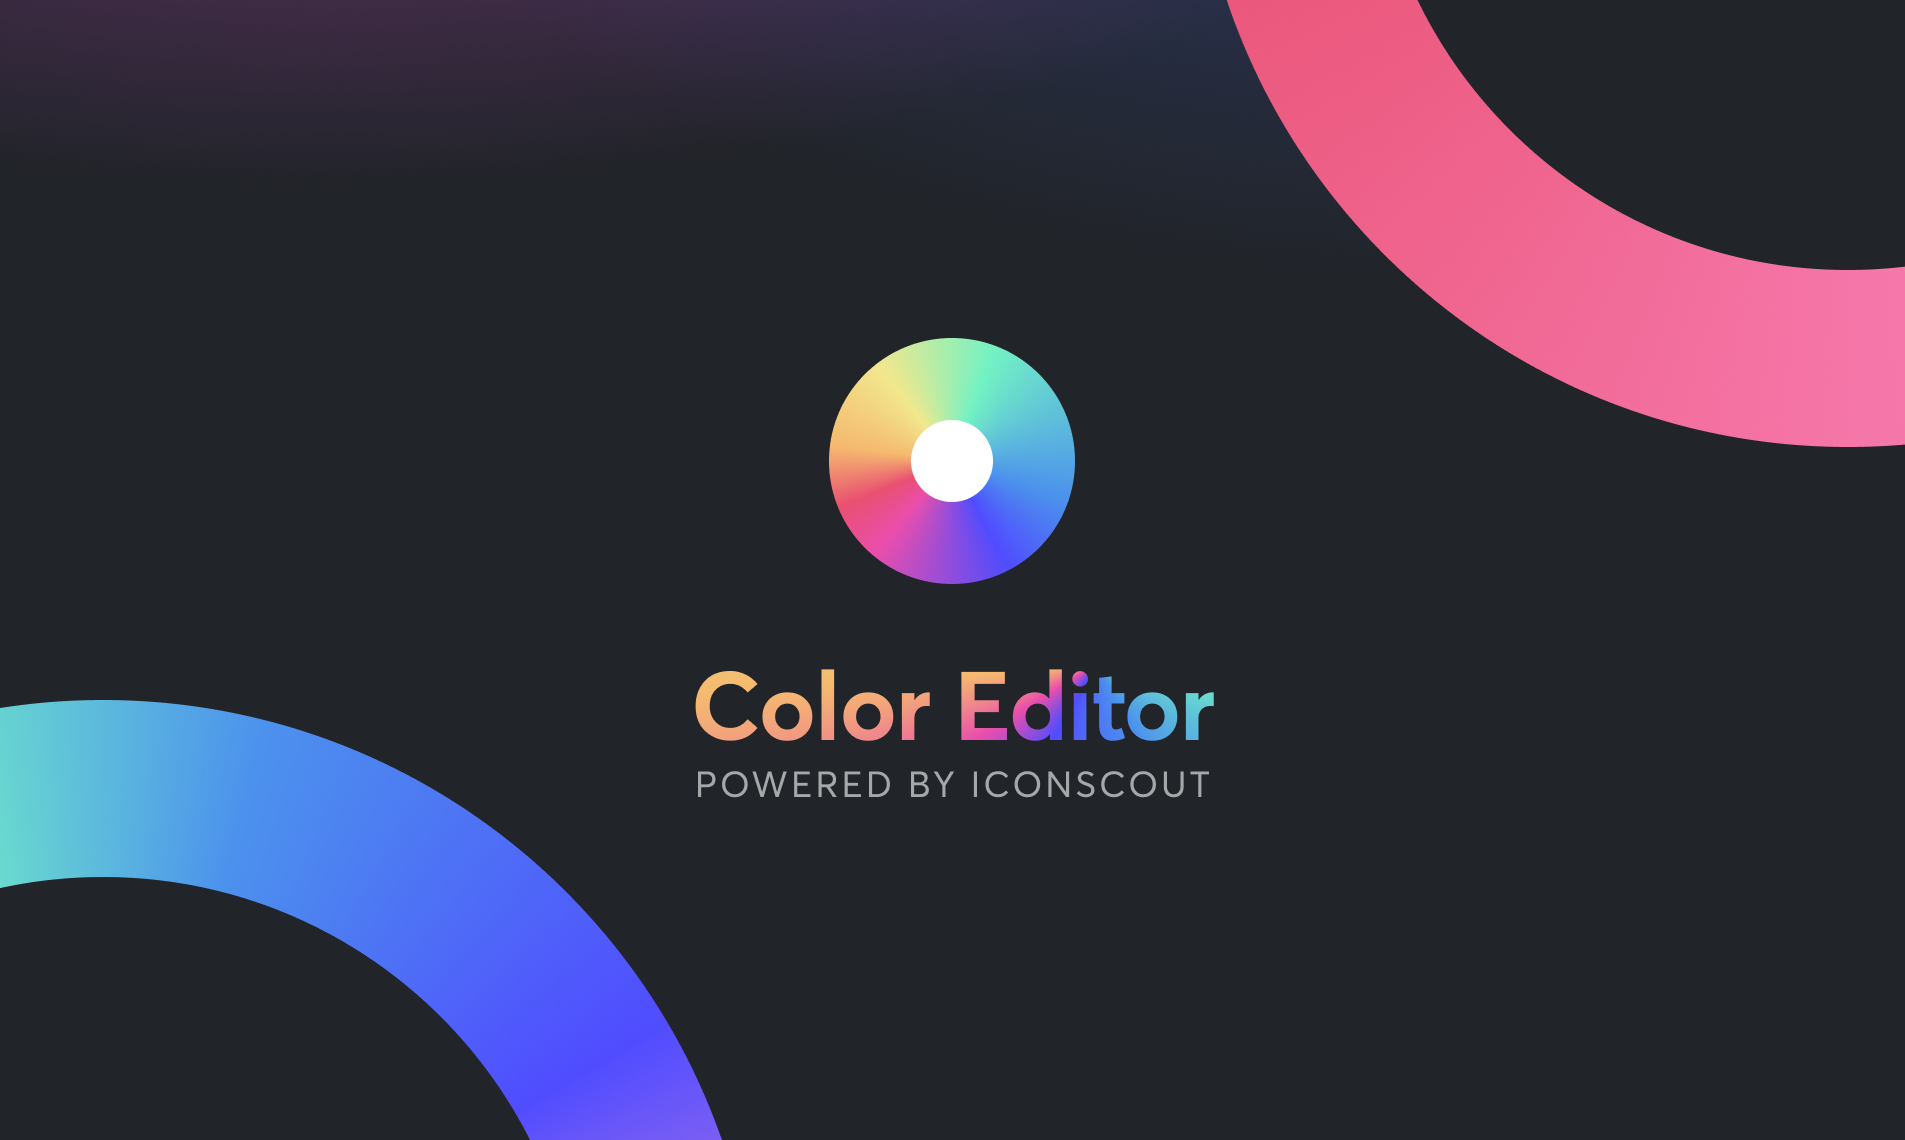 Change Color of PNG - Online PNG Color Changer